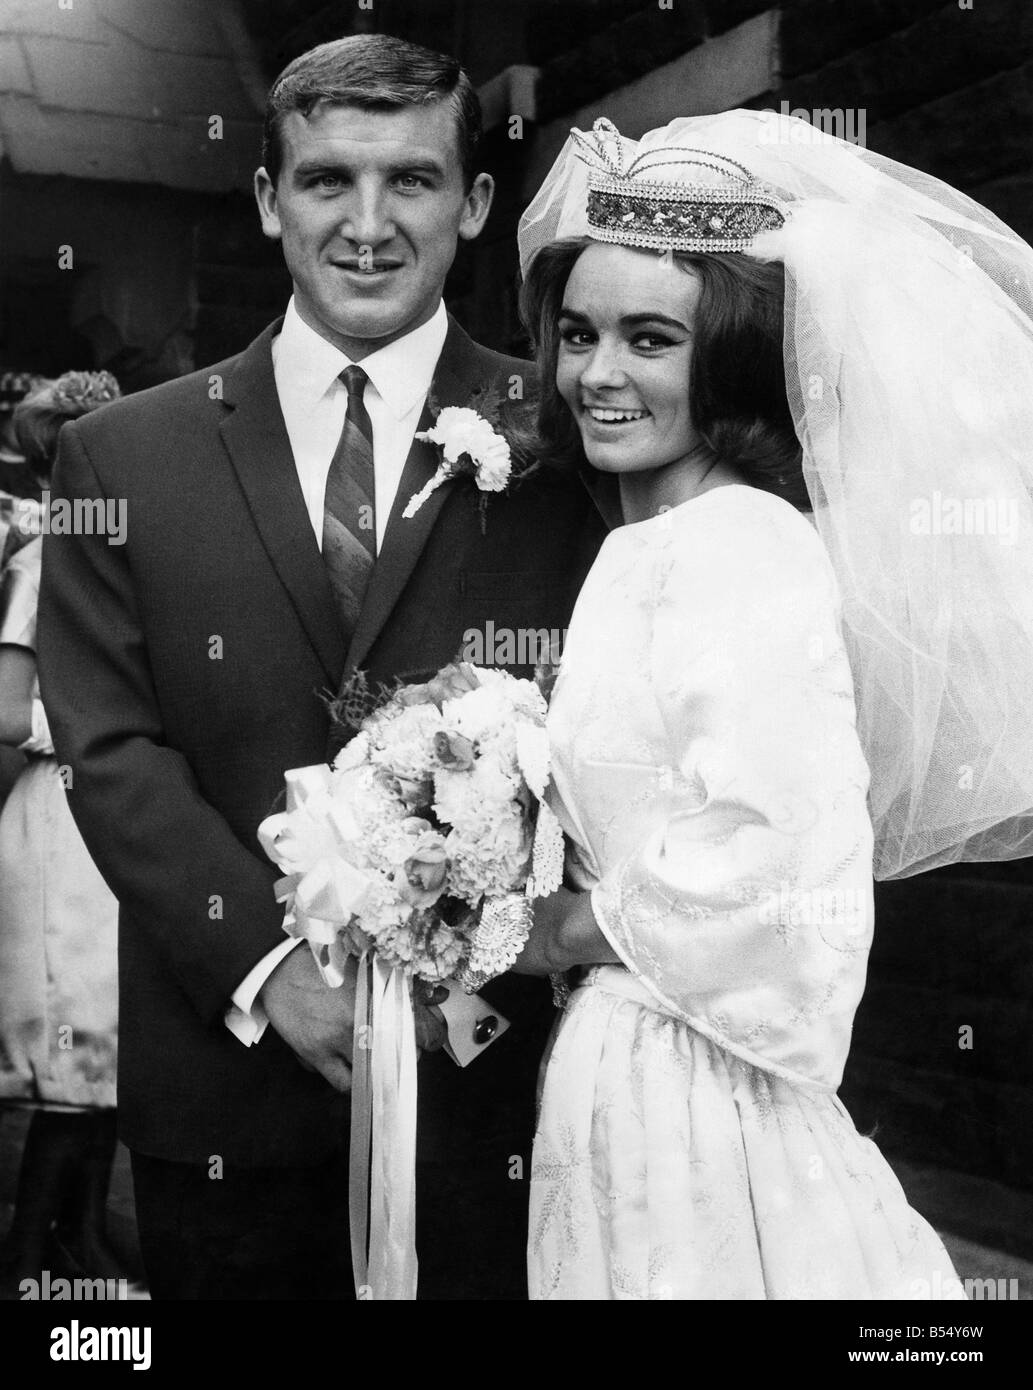 Everton footballer Johnny Morrisey on his Wedding Day. P011956 Stock Photo